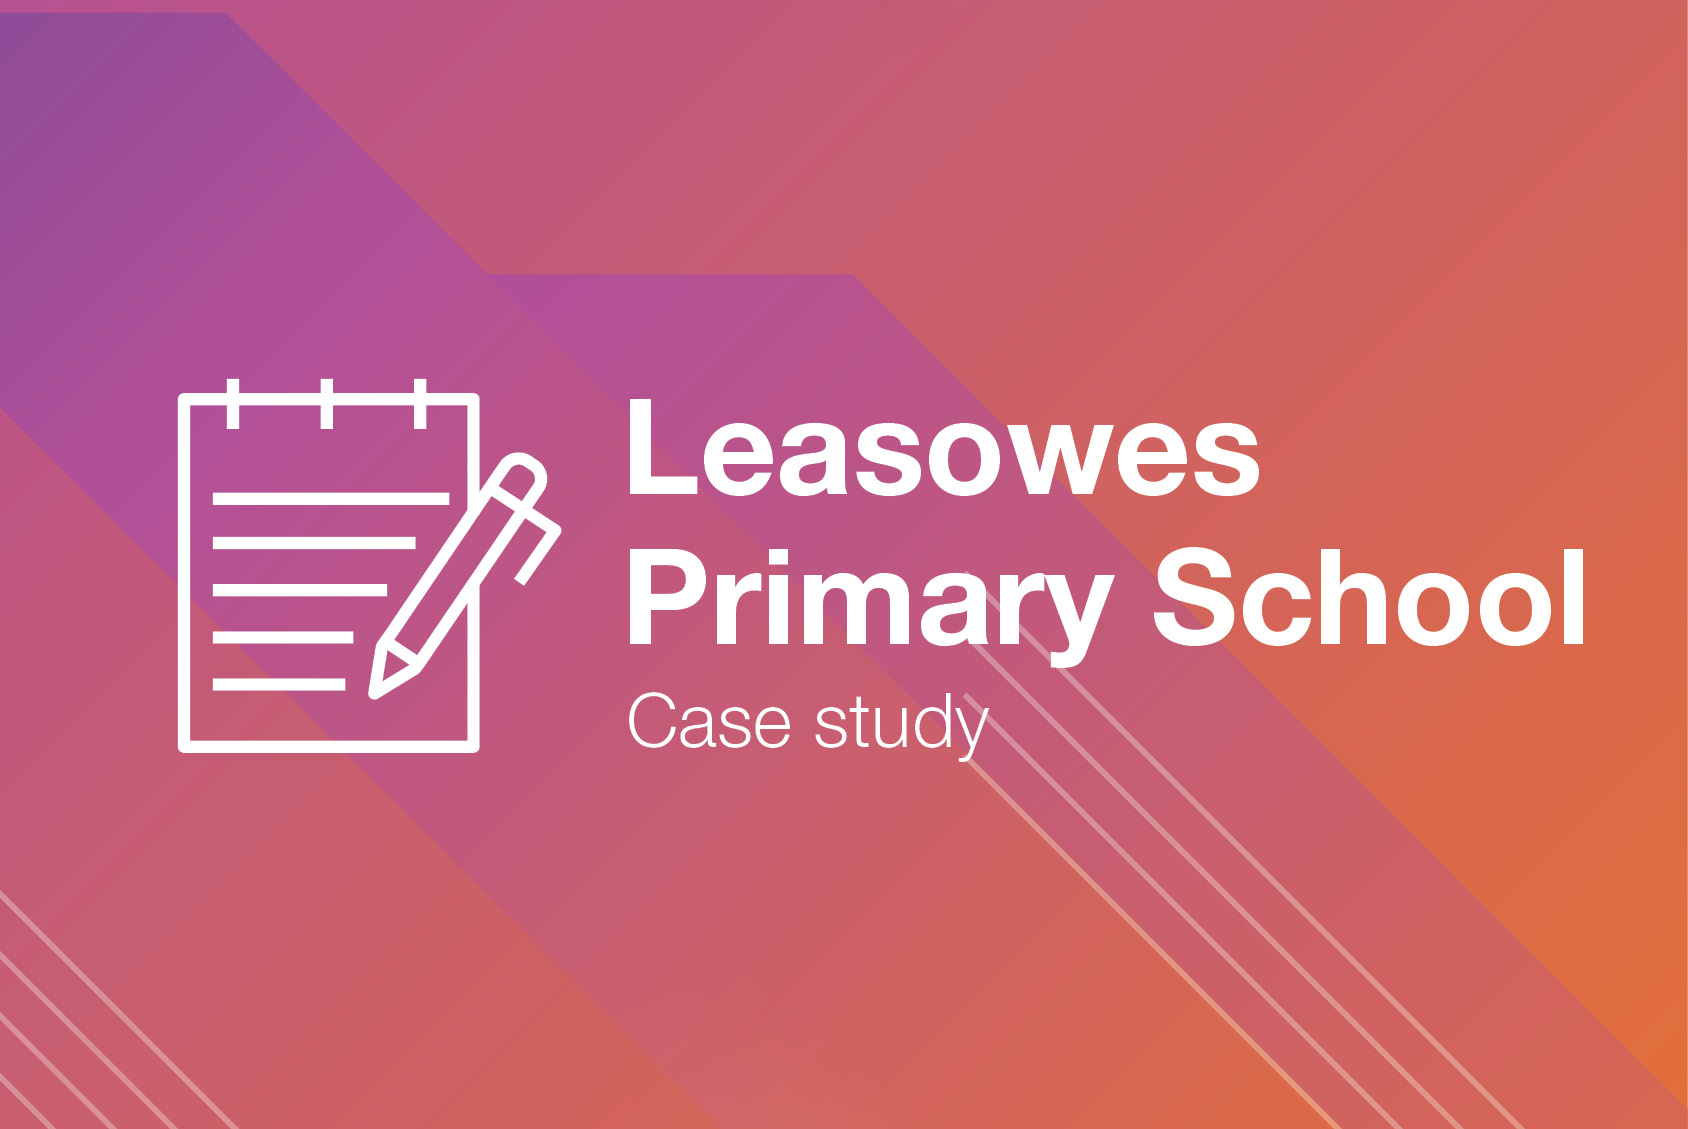 Case study - Leasowes Primary